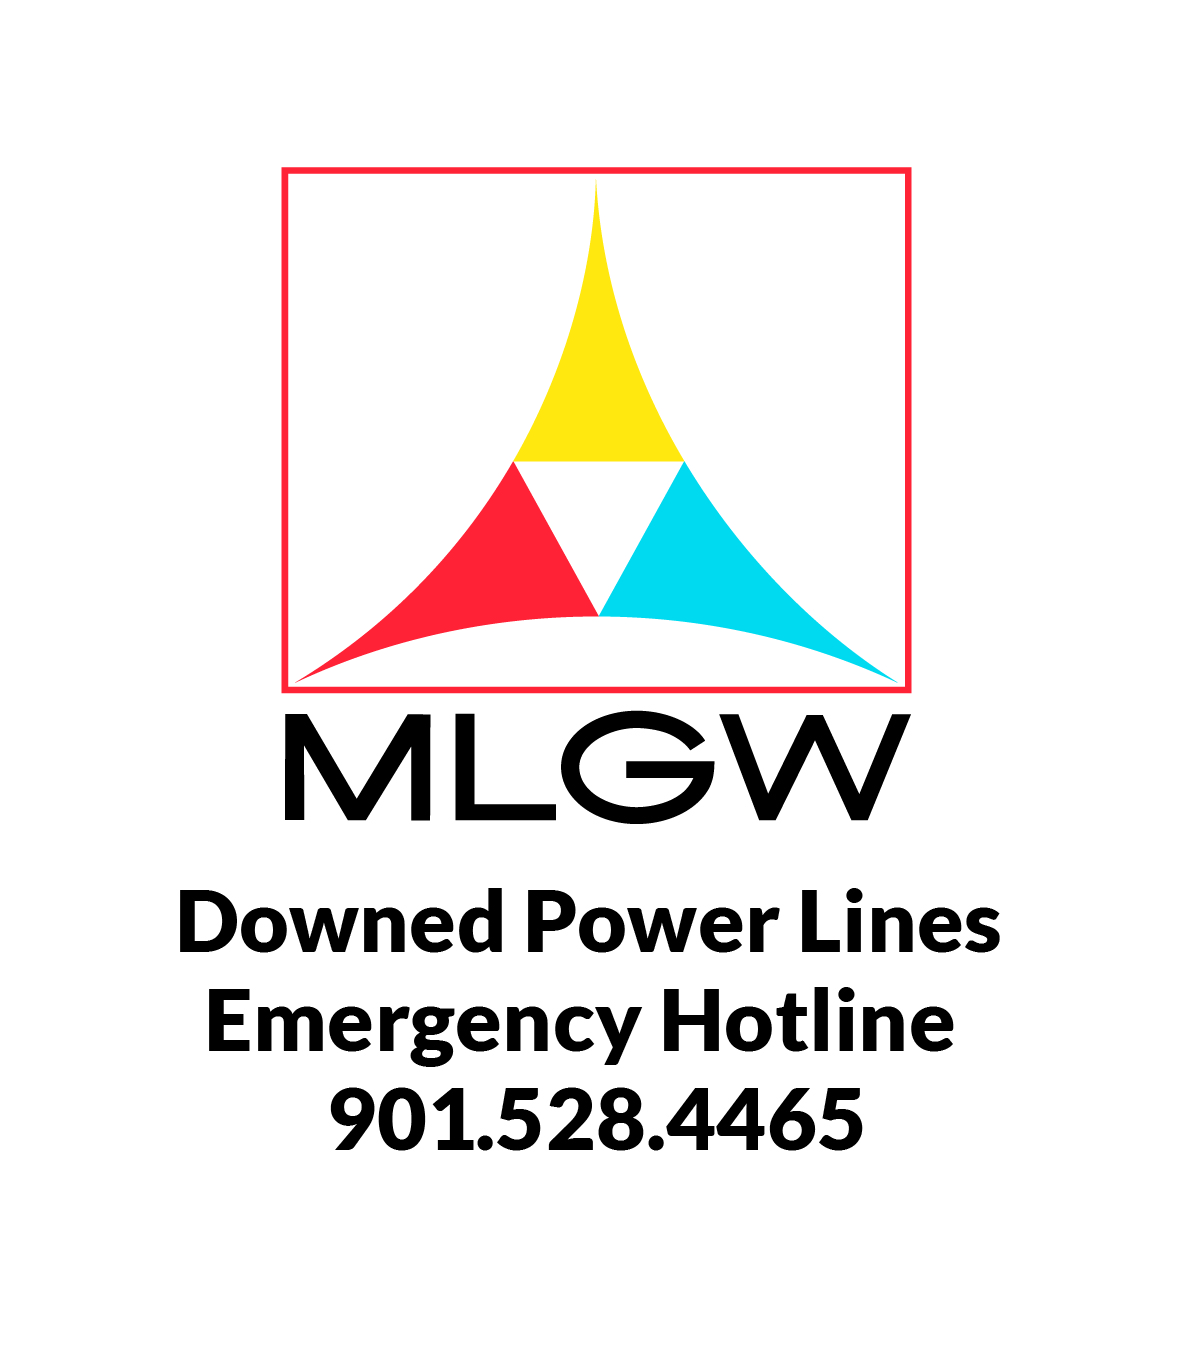 MLGW logo DownedPower tagline 01